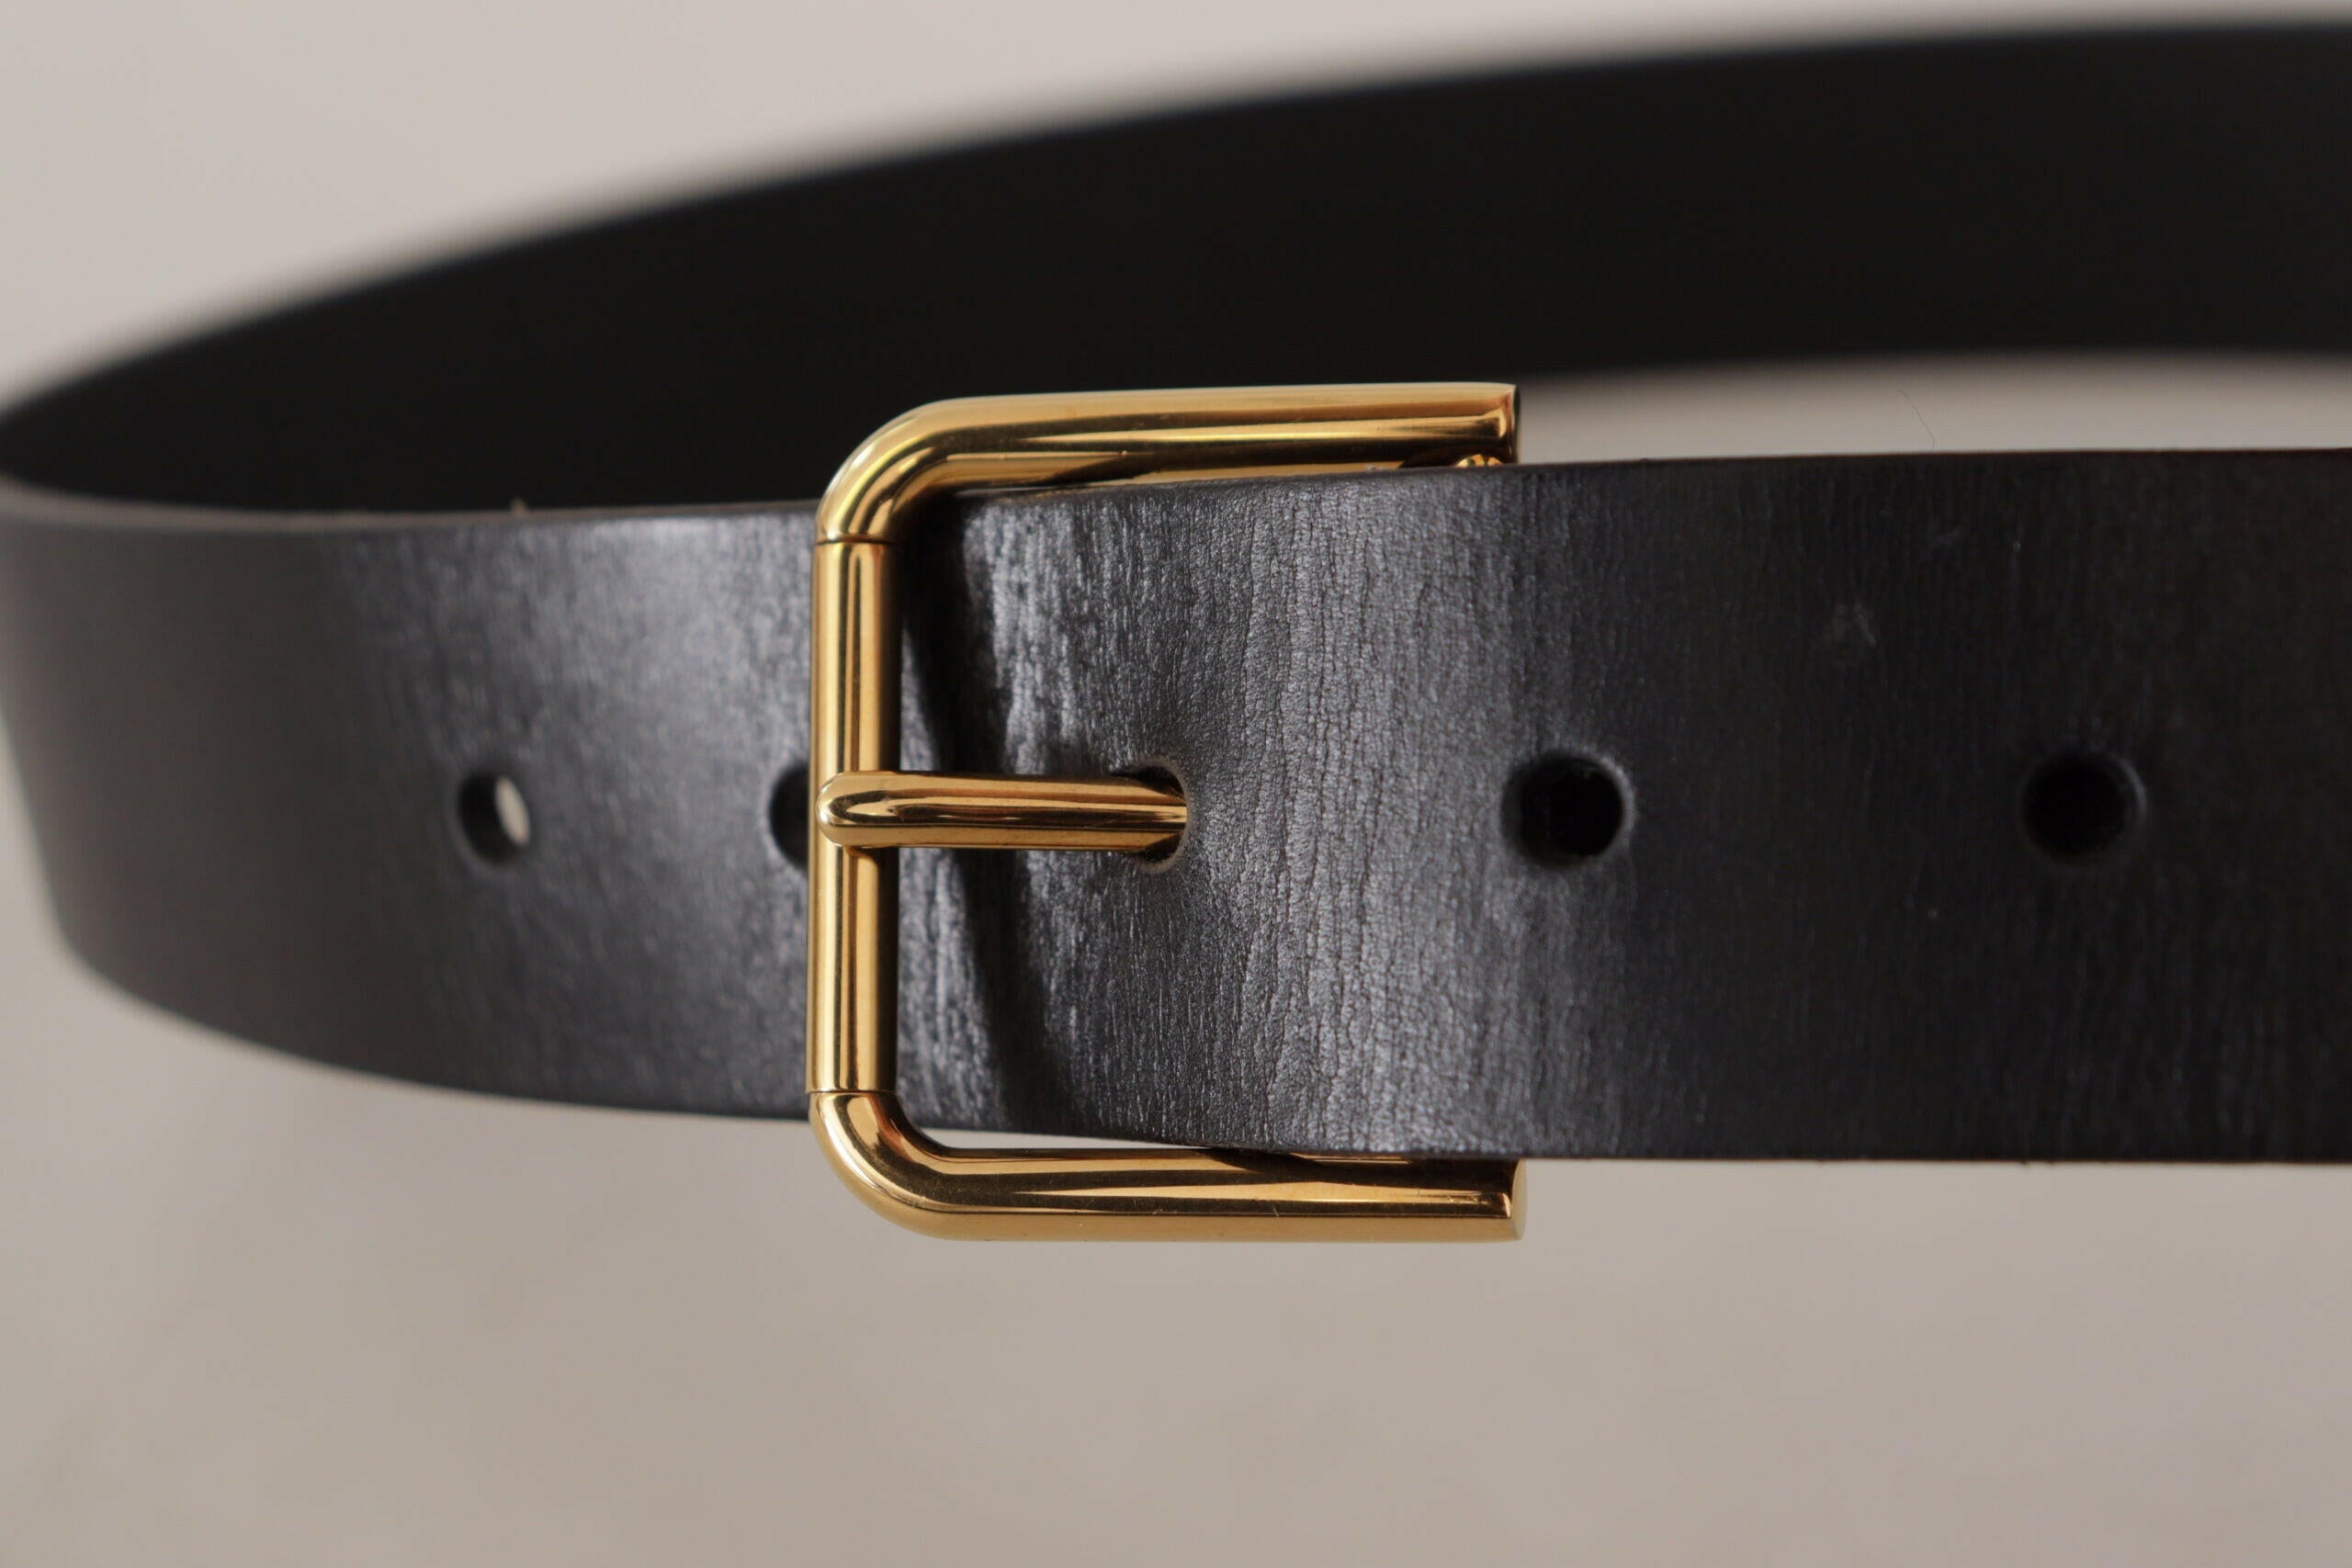 Dolce & Gabbana Black Calf Leather Gold Tone Logo Metal Buckle Belt - GENUINE AUTHENTIC BRAND LLC  